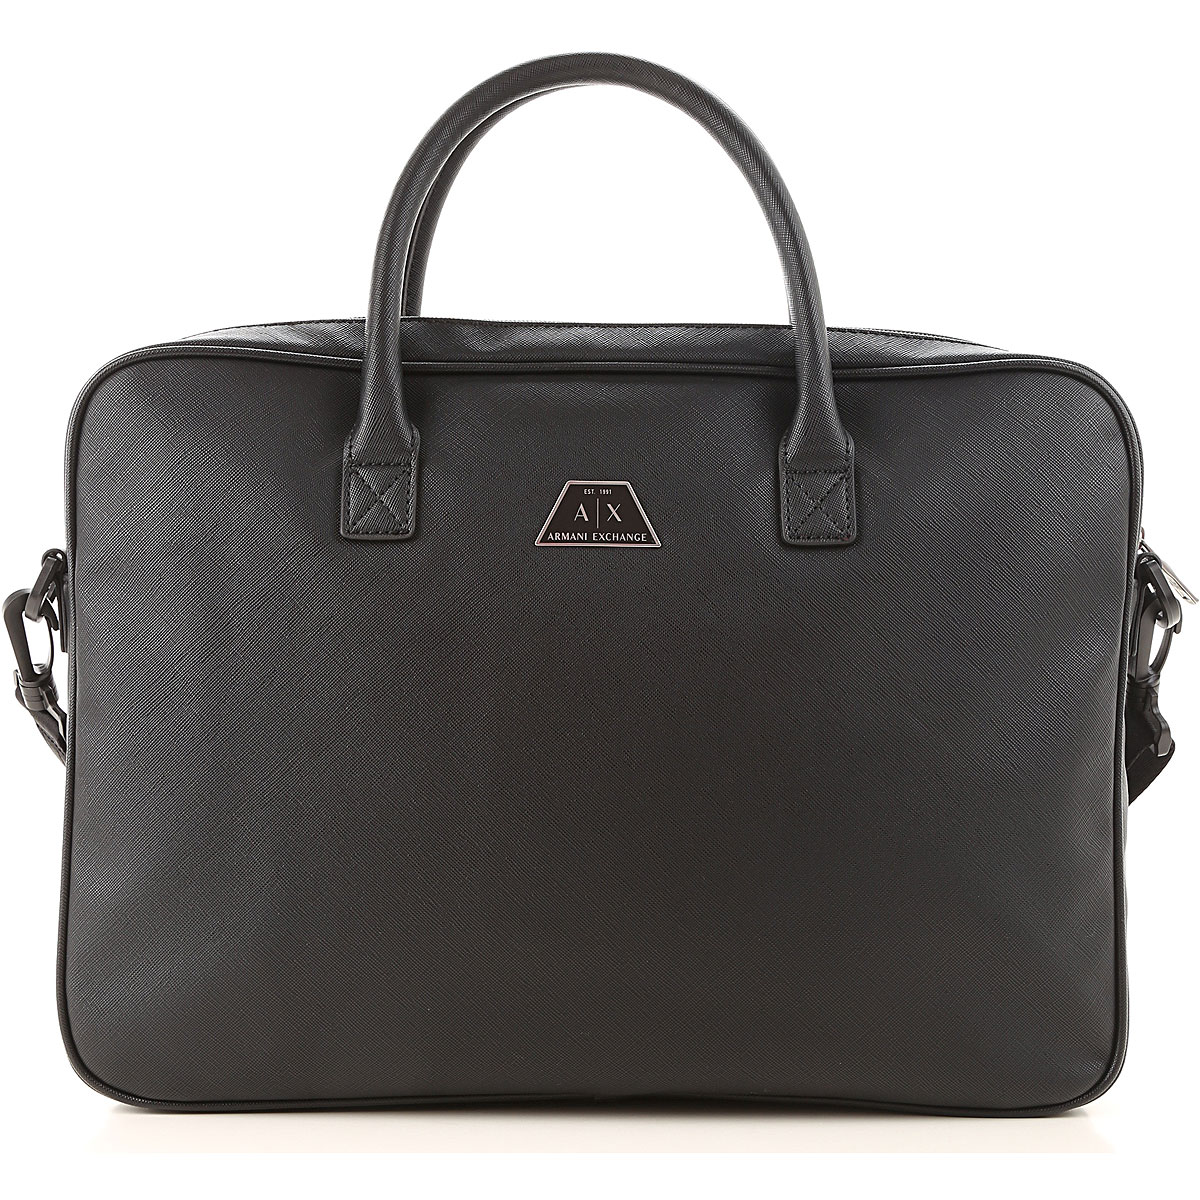 Briefcases Armani Exchange, Style code: 952195-cc523-00020